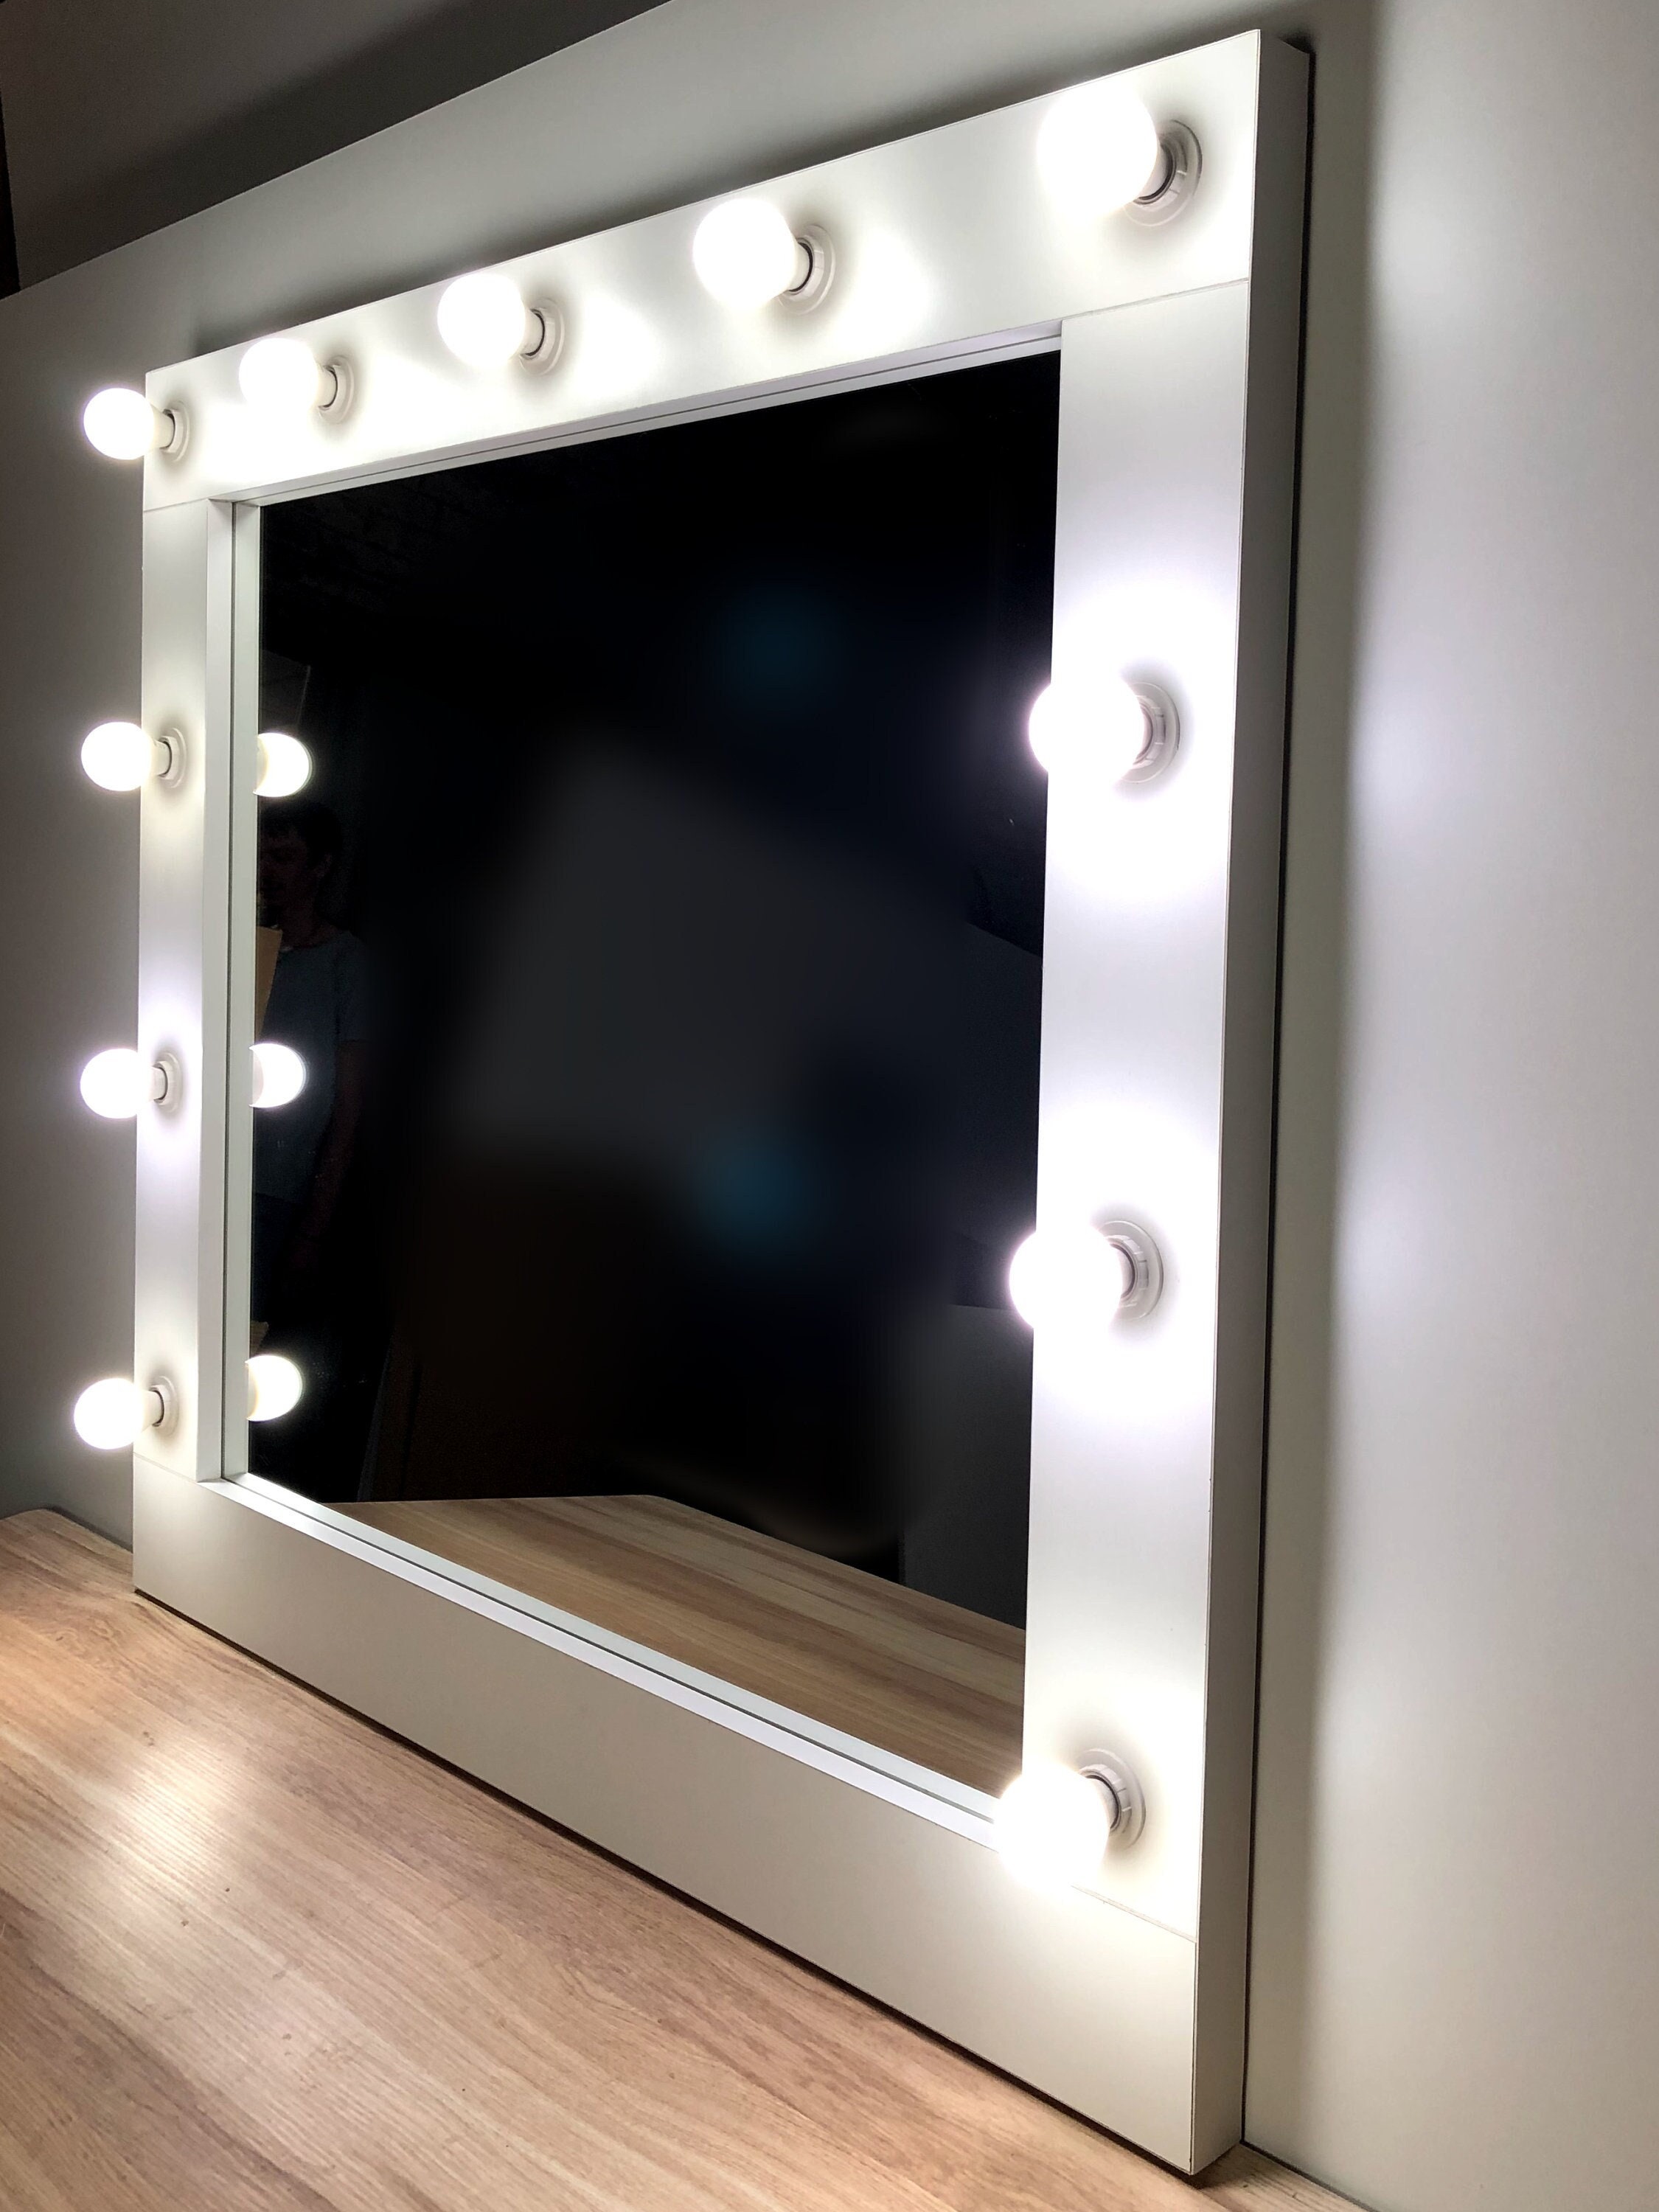 Buy Vanity Mirror With Lights Online In India -  India